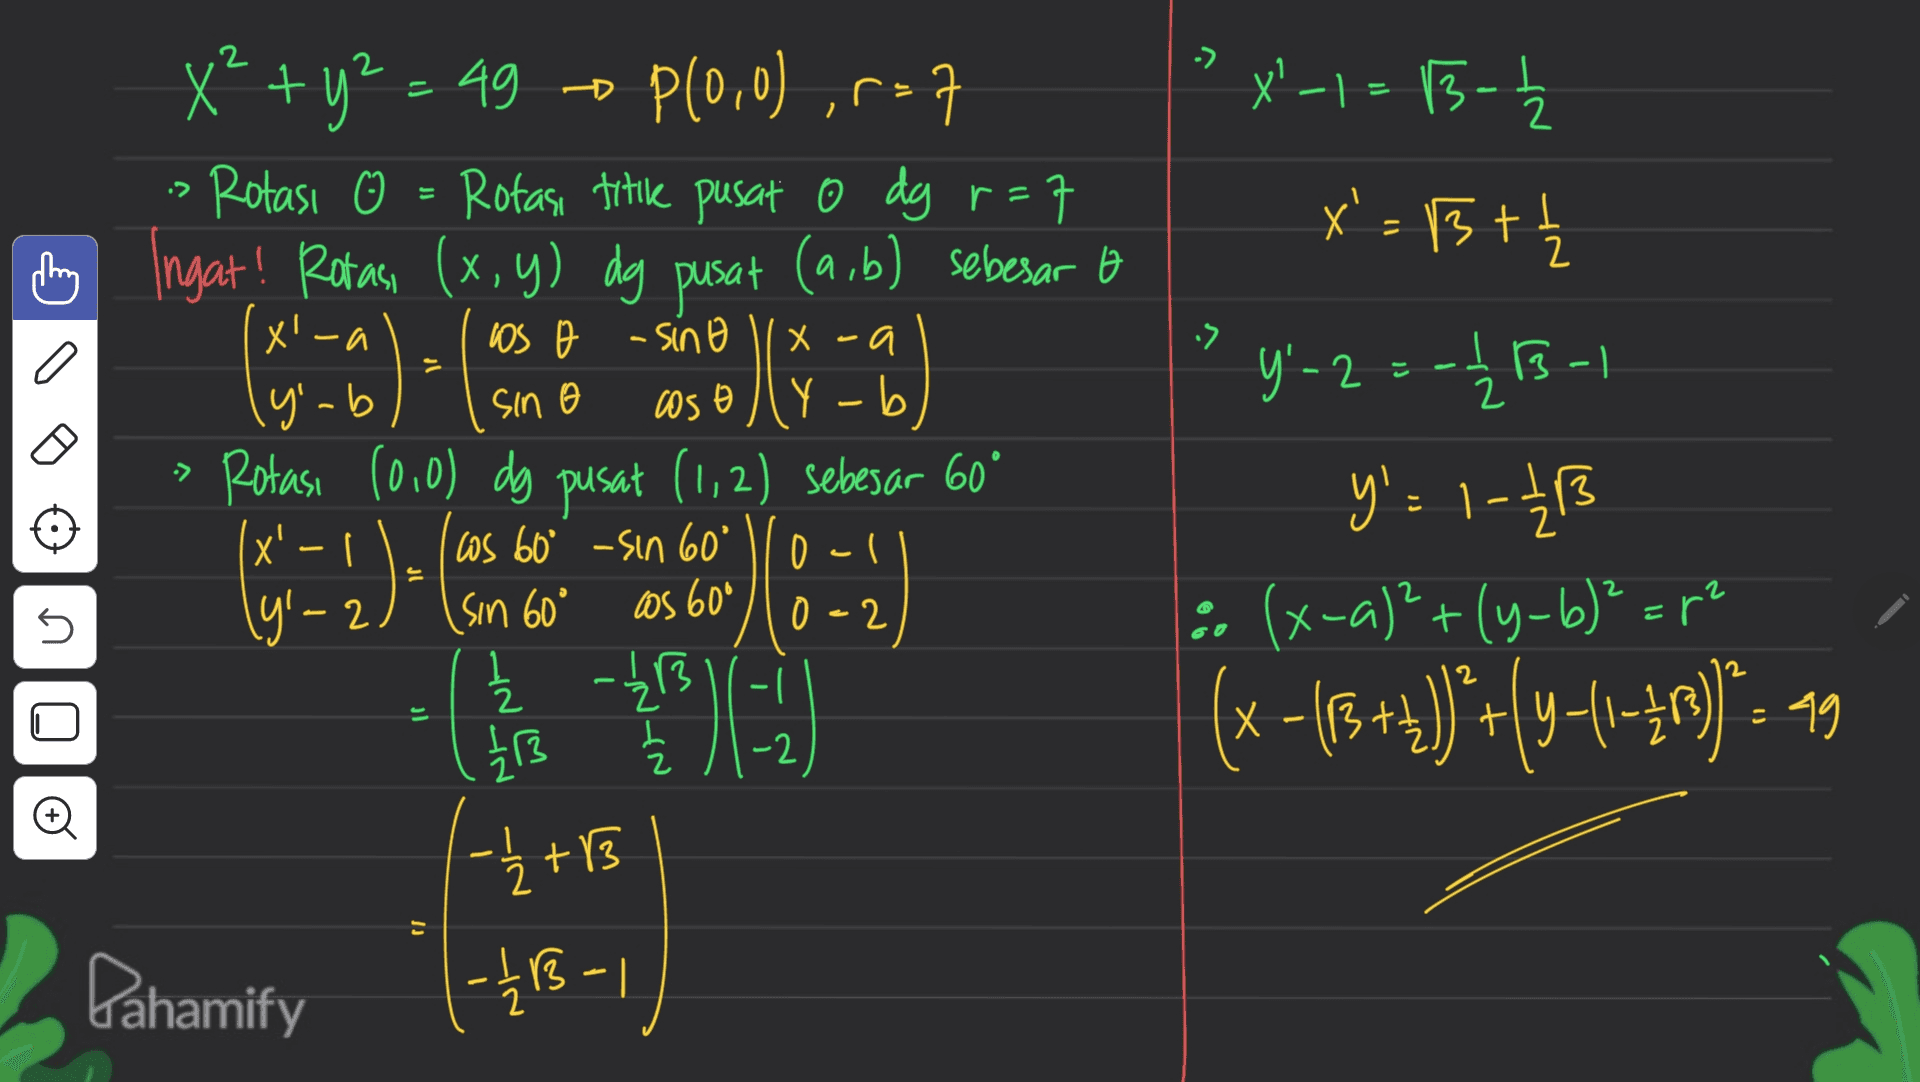 x'-1-15- x'=Bt = 2 x'-a - los e asino X -a G0 -1 y-b sin > x2 + y2 - 49 P(0,0) ,r=7 Rotasi ☺ = Rotasi titike pusat o dg r=7 Ingat! Rotas (x, y) dg pusat (a,b) sebesar o 65) cosolly-b Rotasi (0:0) dg pusat (1,2) sebesar 60' ° I cos 60° -sin 60° /ool sin 60° 늘 2 1/13 | - 1/2 +13 -1/ ' (='). ' Y-2--15- y'=1/18 : (x-a)²+(y-b)² =1² (x=(3+4)*+(4+1-30)*3.99 as 60° 2 0 - 2 n. -Ź13 u SEID L X -2 + Pahamify 13-1 2 